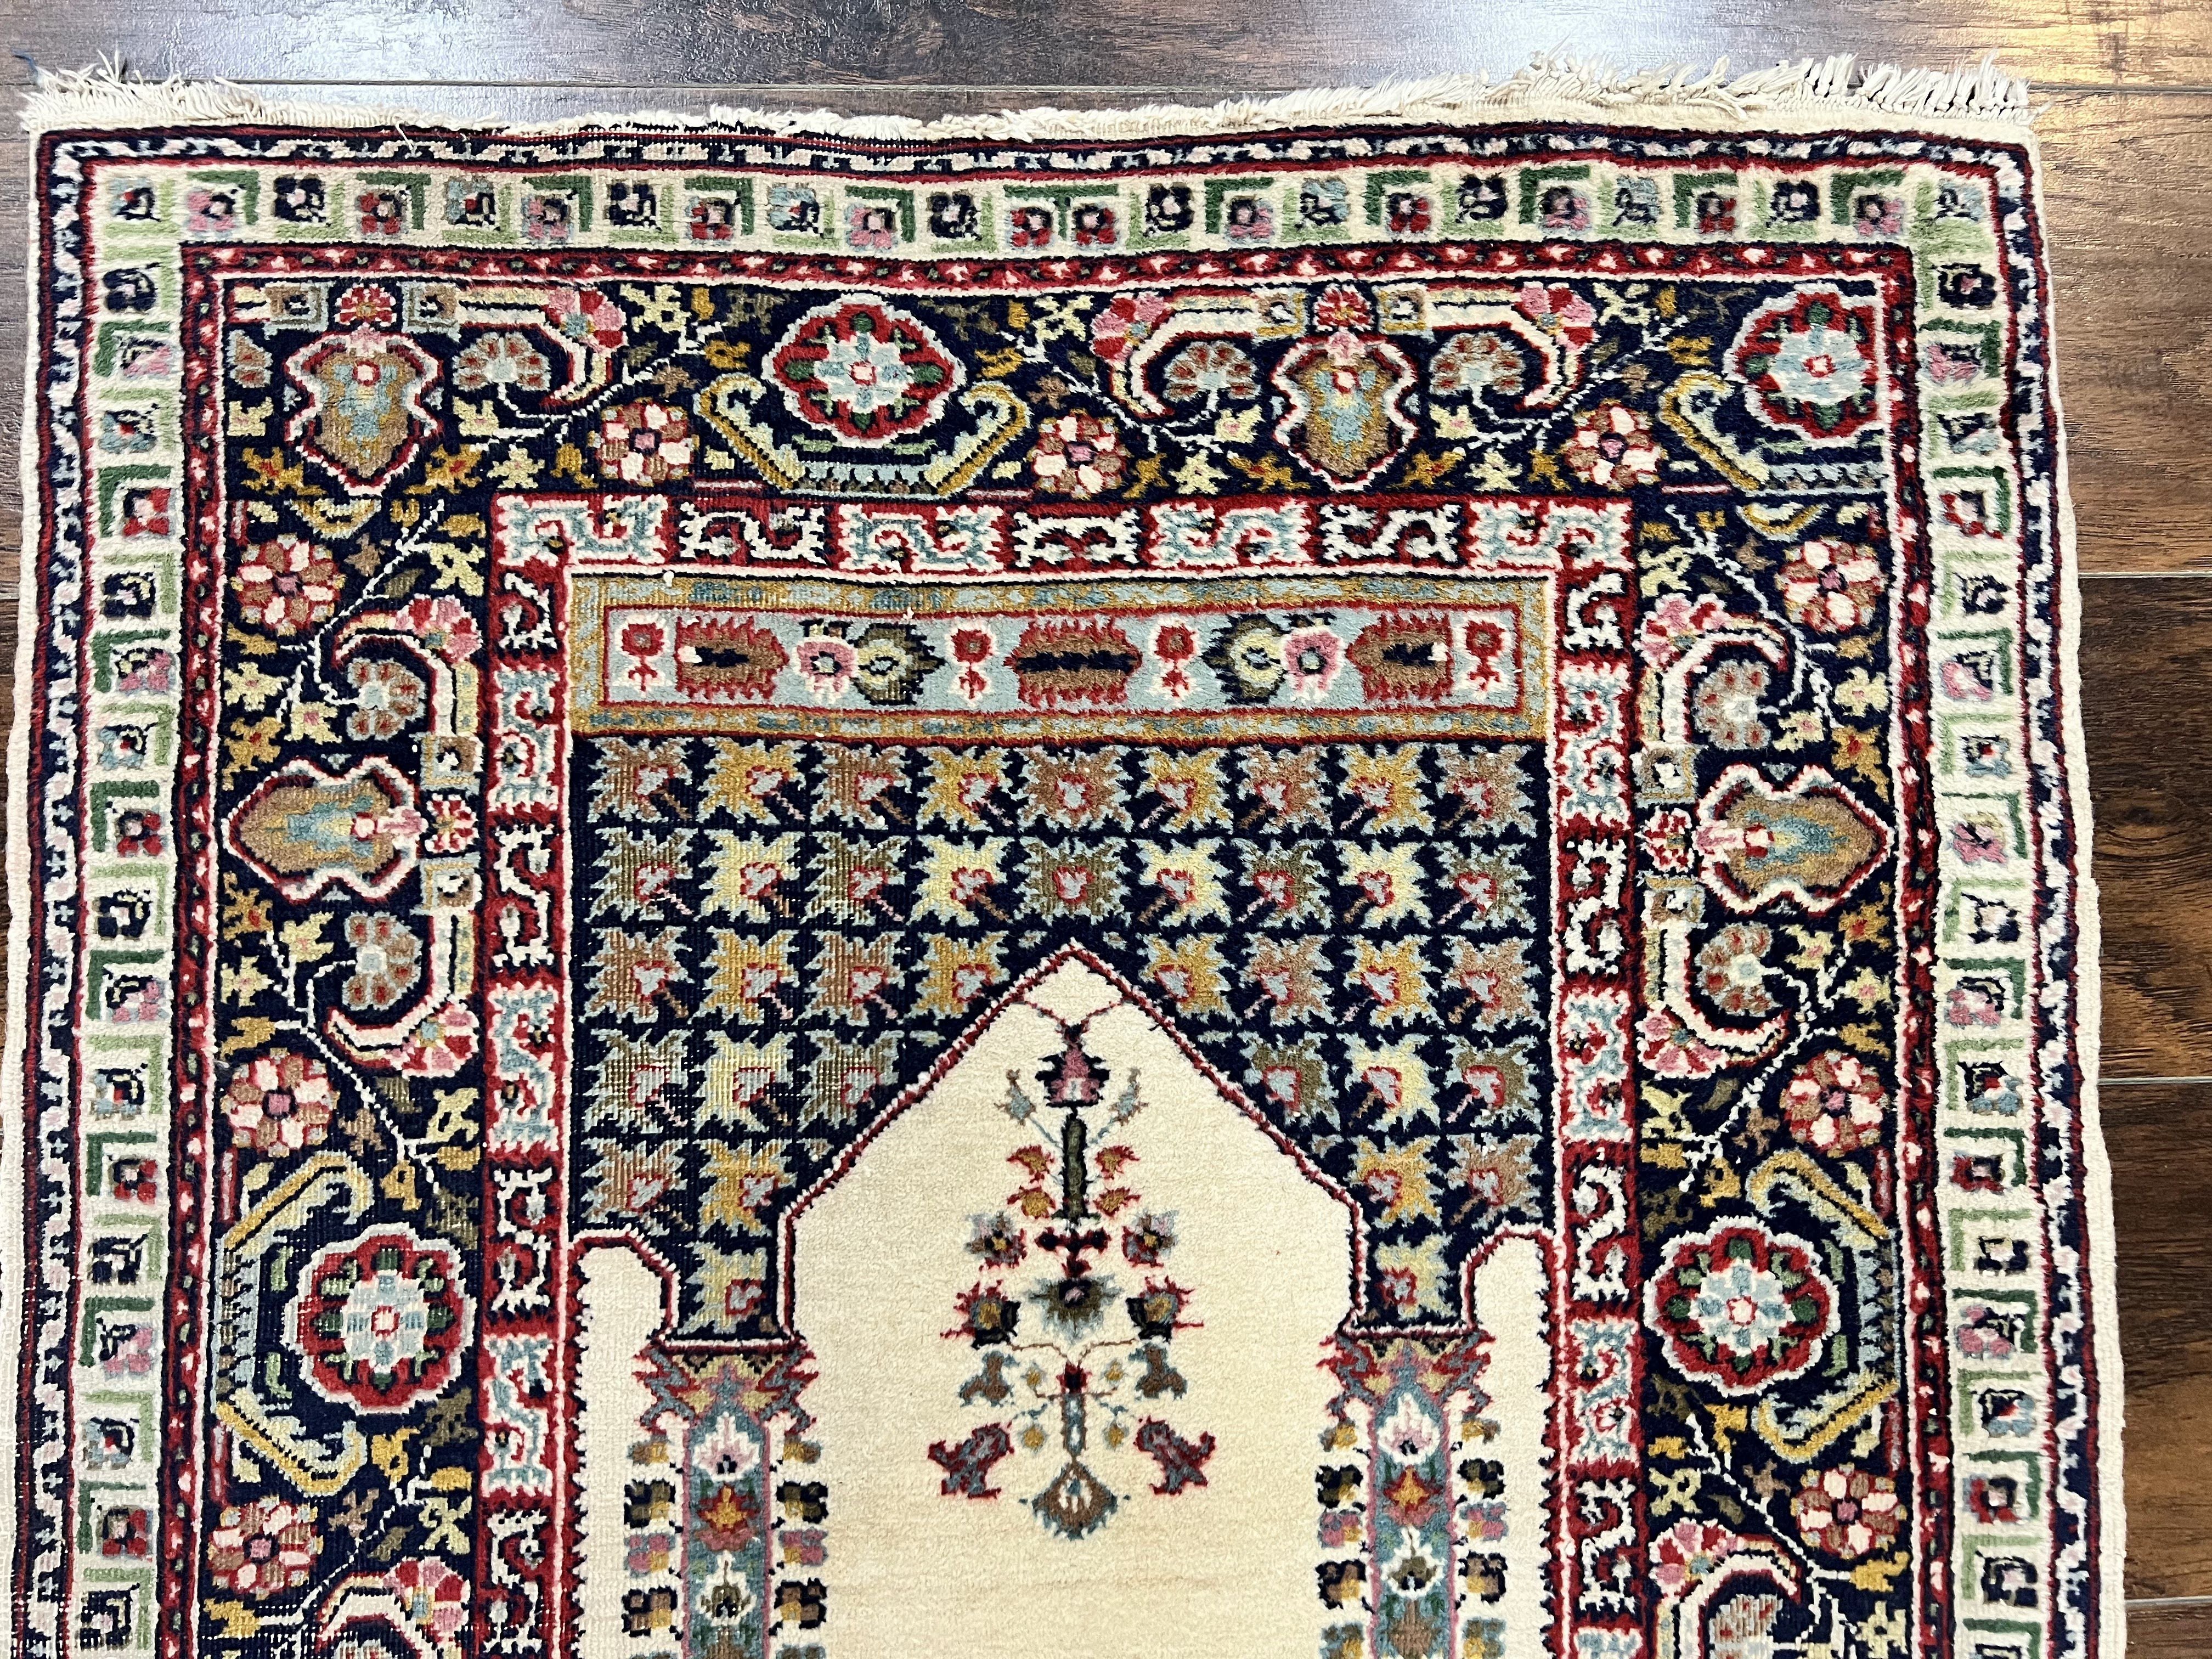 2.5*4 feet persian silk prayer rug